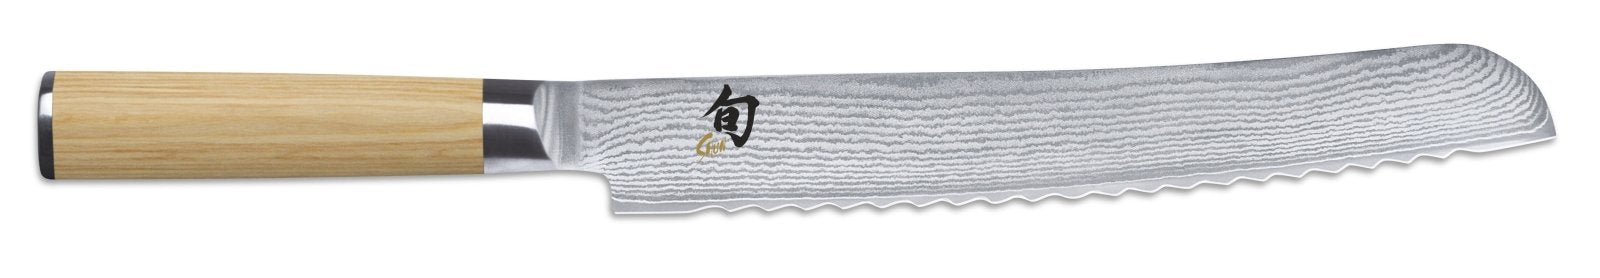 KAI Shun White 23cm Bread Knife - KAI-DM-0705NW - The Cotswold Knife Company